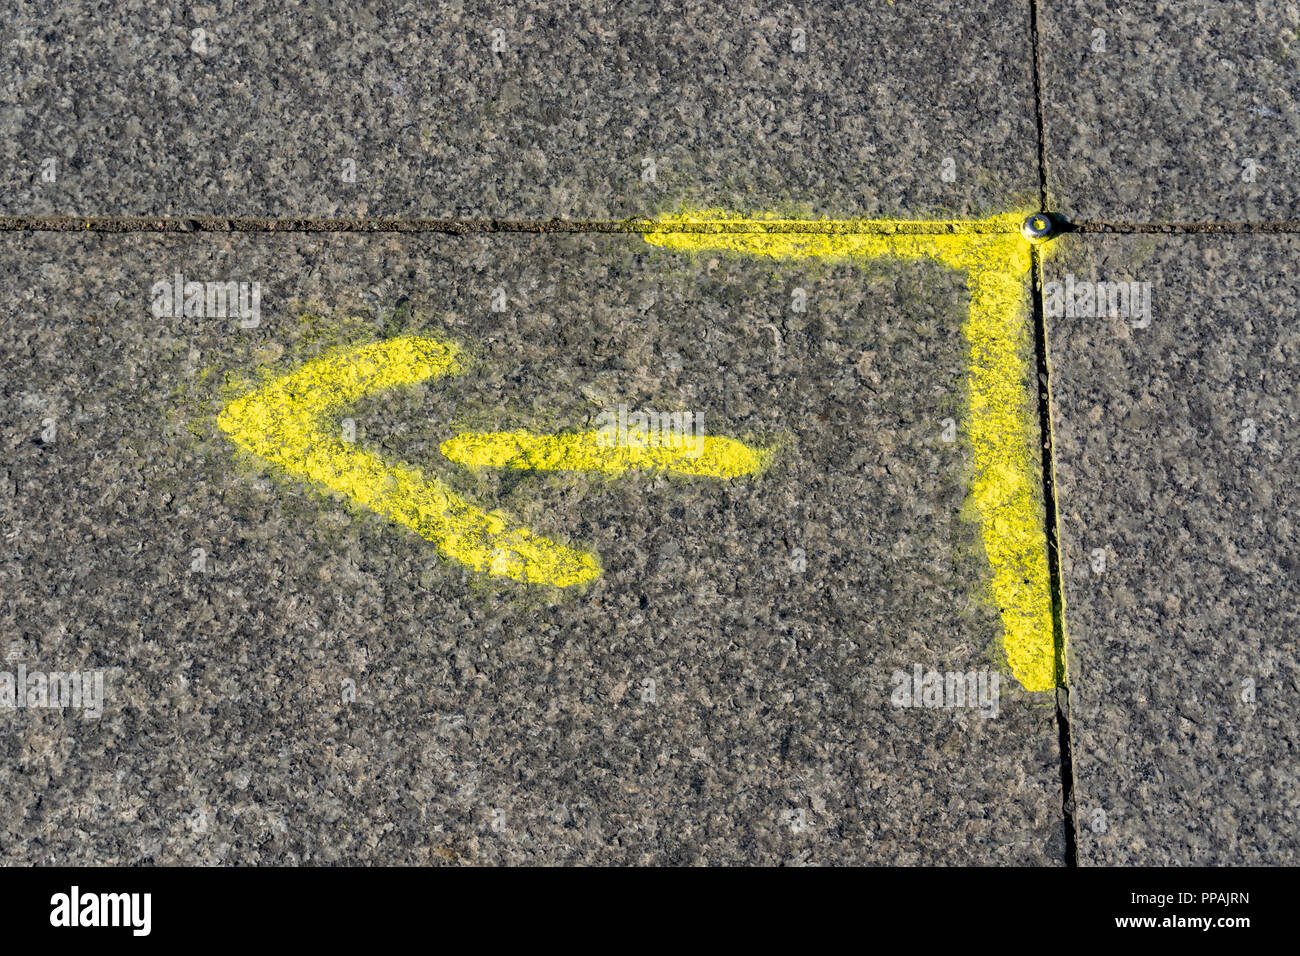 Berlin, Germany, September 18, 2018: Close-Up of Yellow Arrow Road Marking Stock Photo